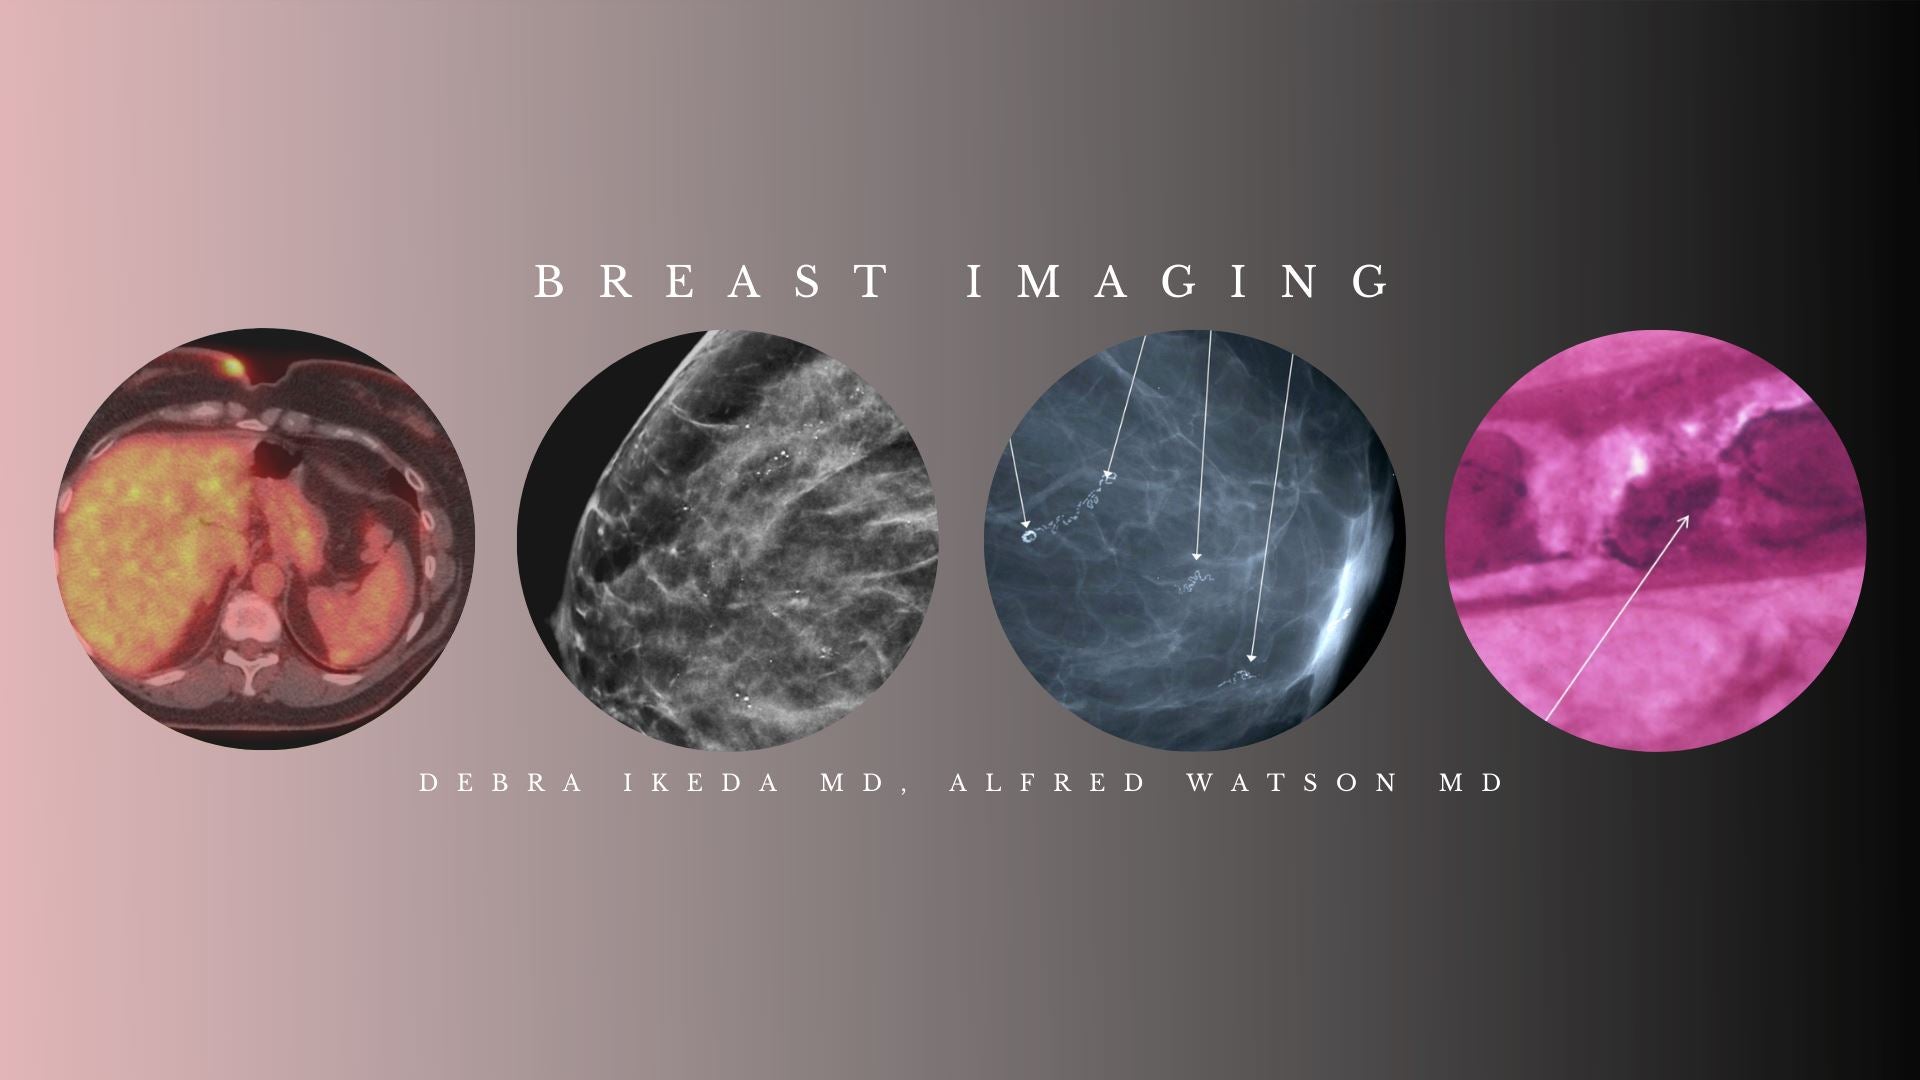 CME Science Breast Imaging (BUNDLE) – Debra Ikeda M.D., Alfred Watson M.D 2020 | Medical Video Courses.